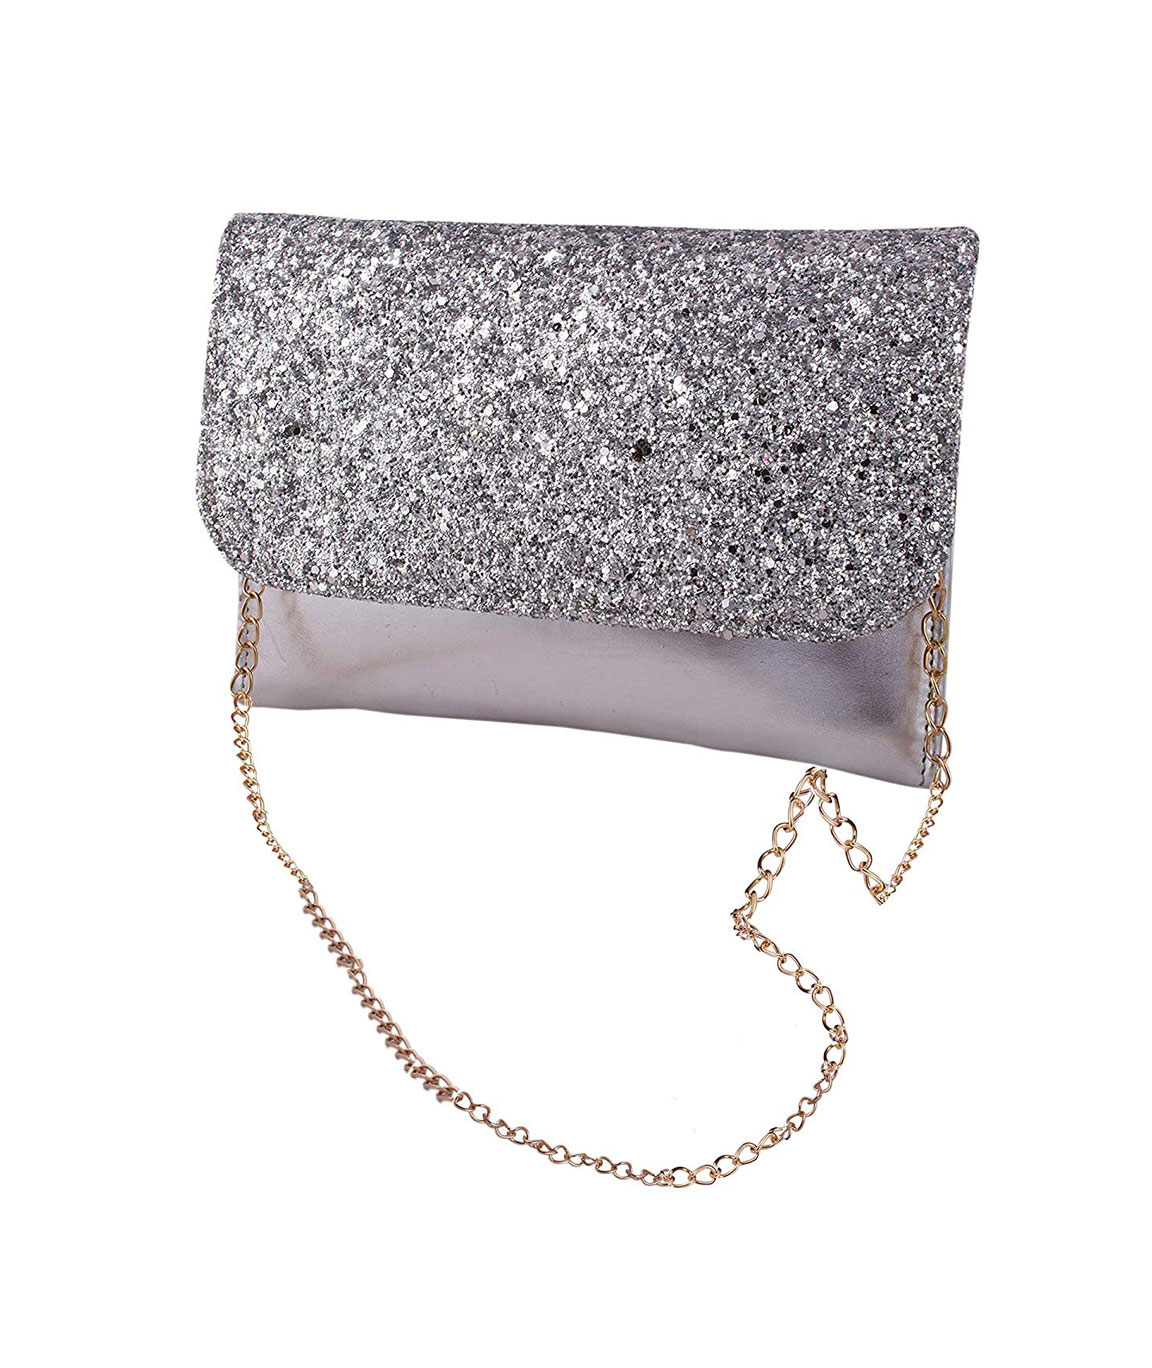 Buy Lomax Latest Handbag For Women's | Ladies Purse Handbag (Green, Pink)  at Amazon.in